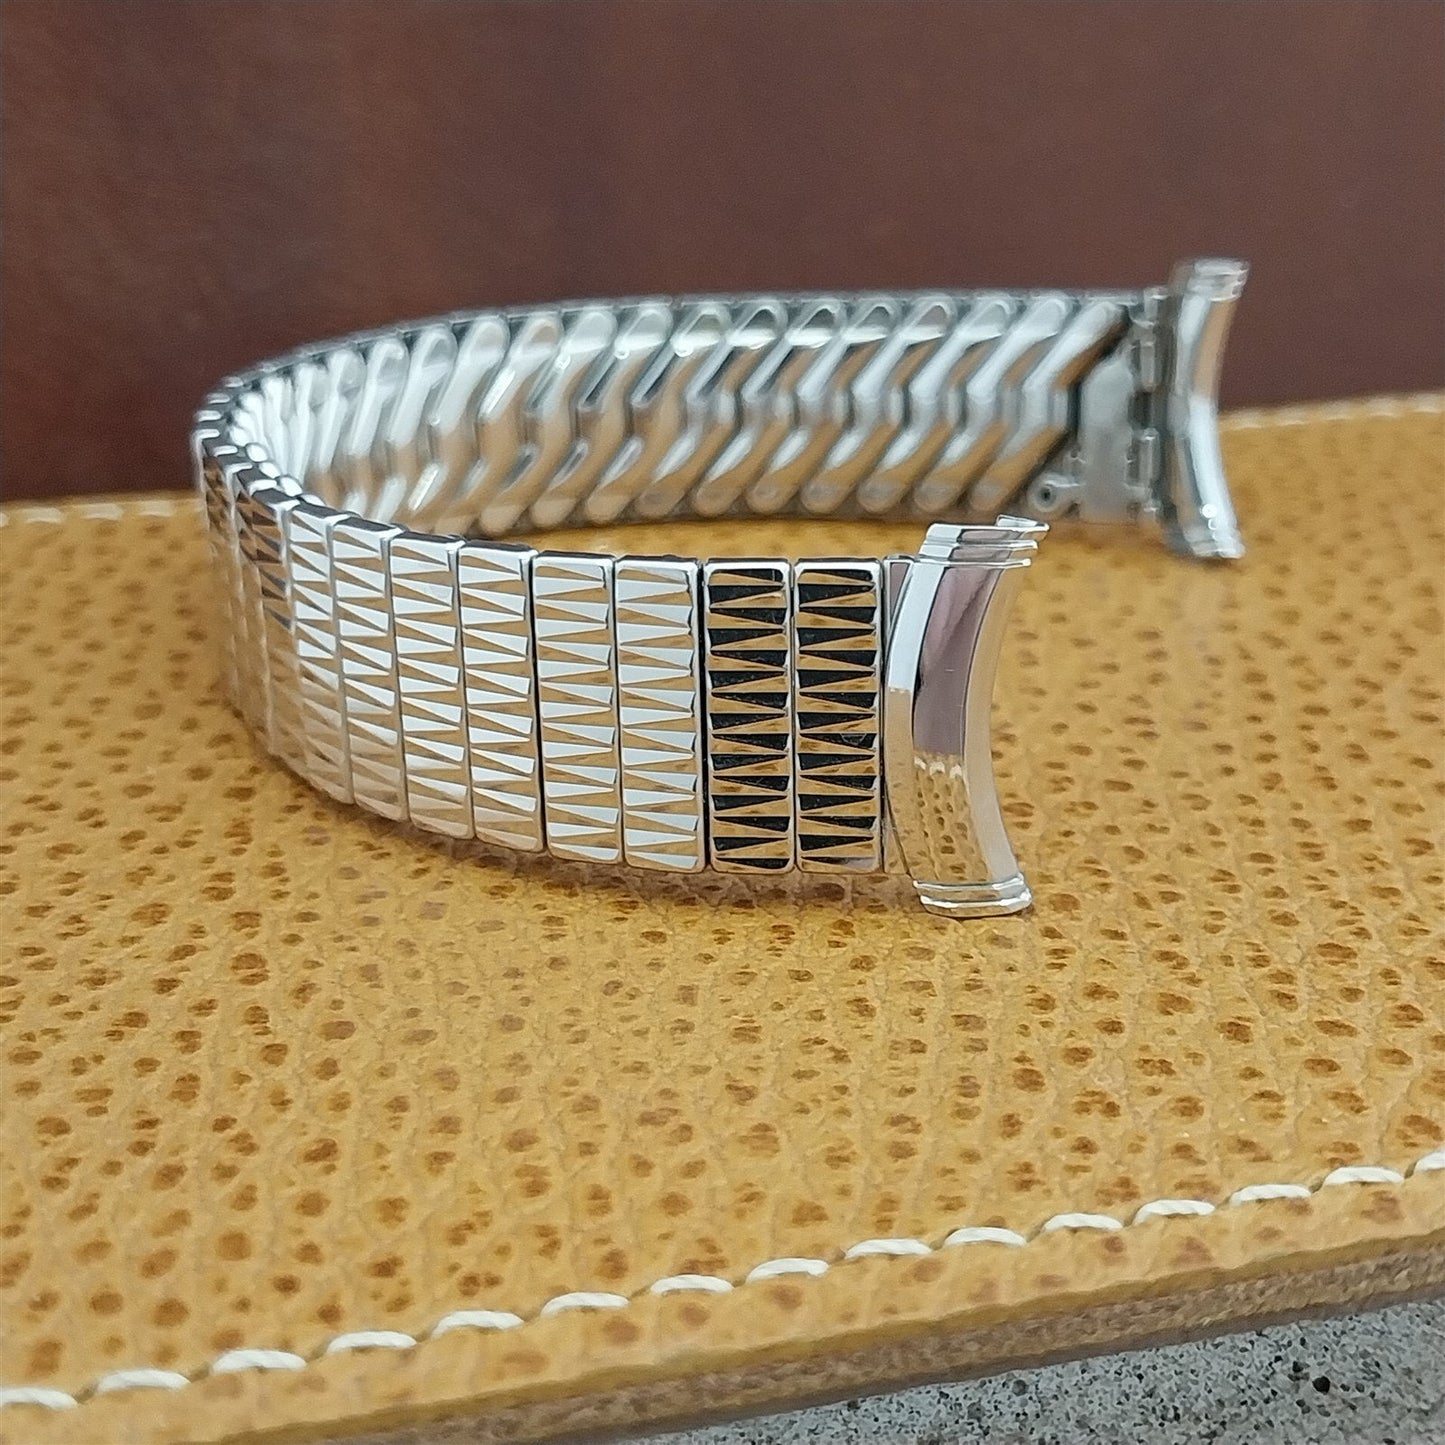 19mm 18mm 16mm Kreisler 10k White Gold-Filled Unused 1960s Vintage Watch Band